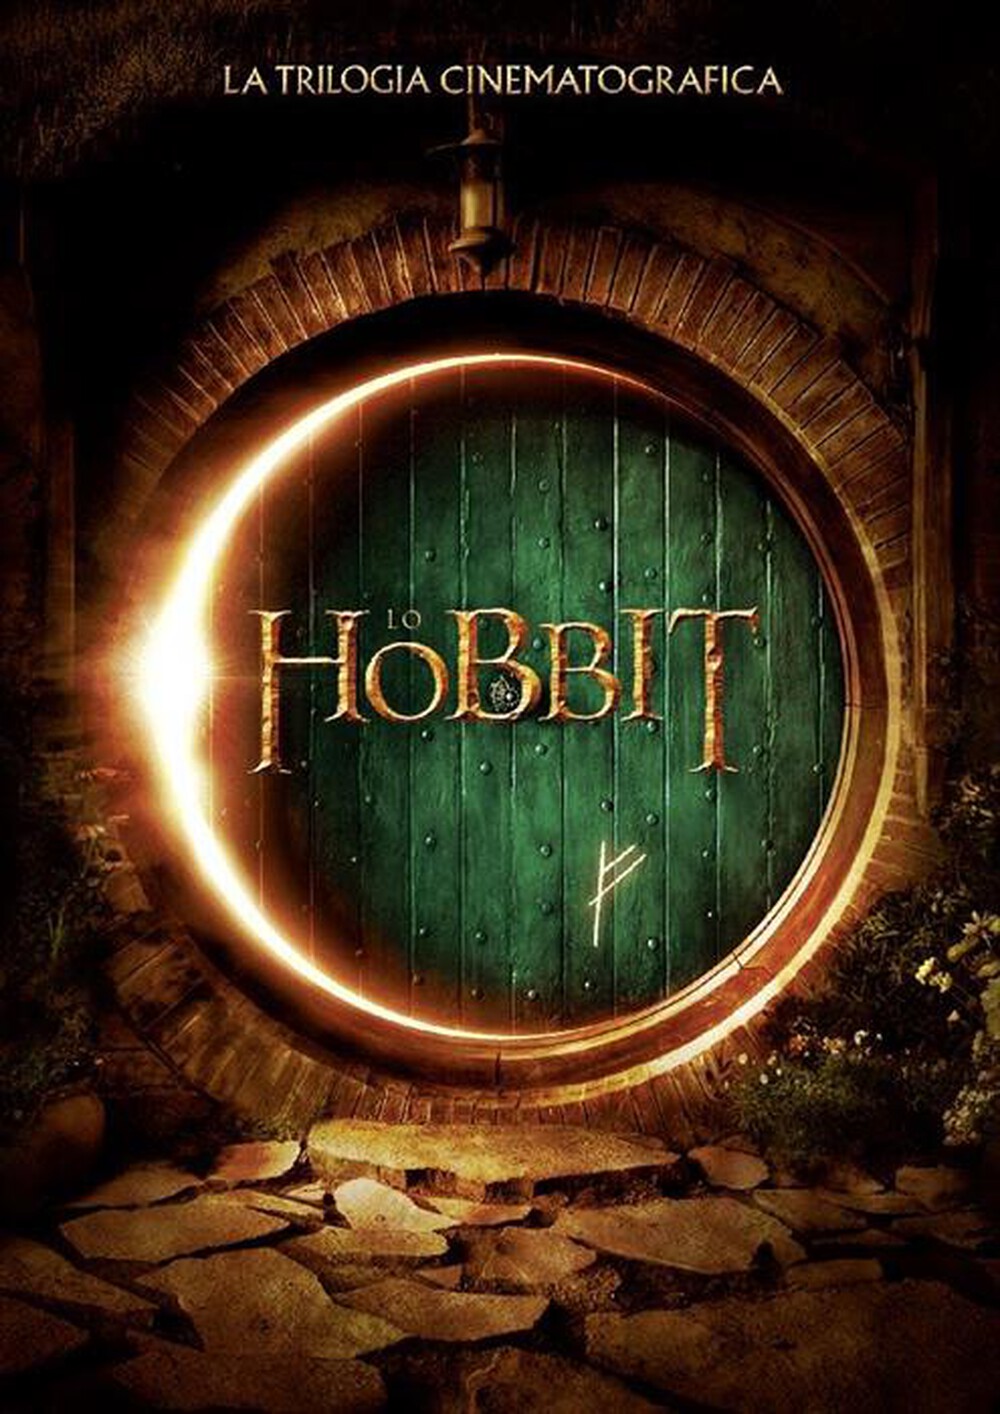 "WARNER HOME VIDEO - Hobbit (Lo) - La Trilogia (3 Dvd) - "